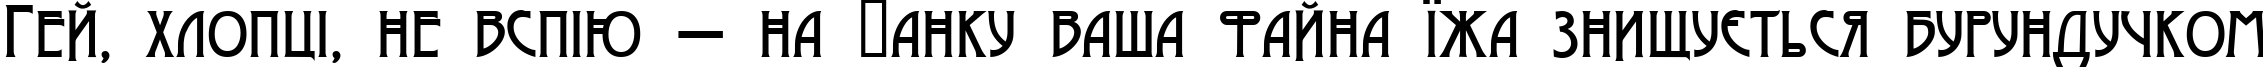 Пример написания шрифтом Moderno One текста на украинском